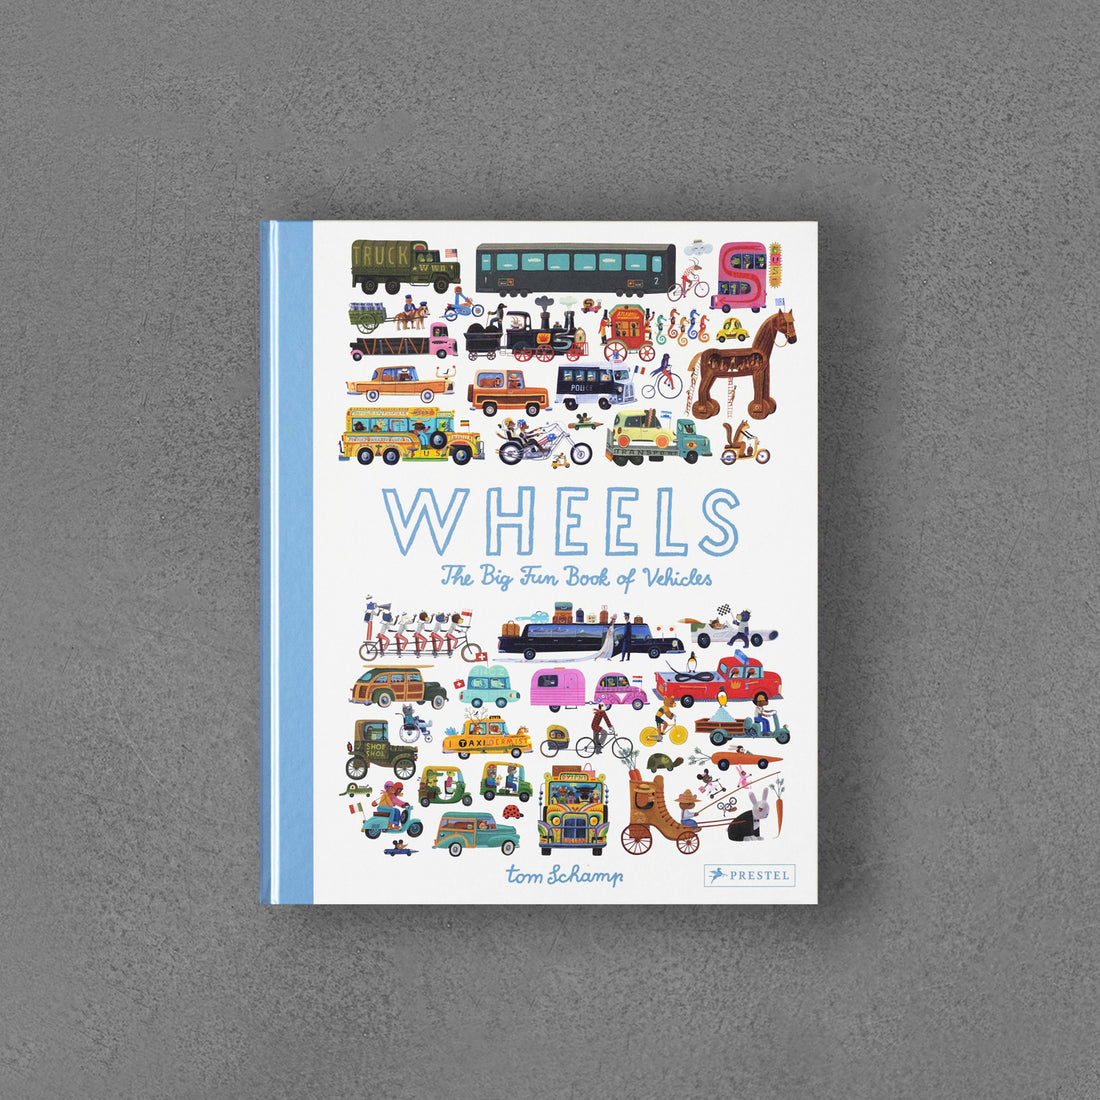 Wheels: The Big Fun Book of Vehicles